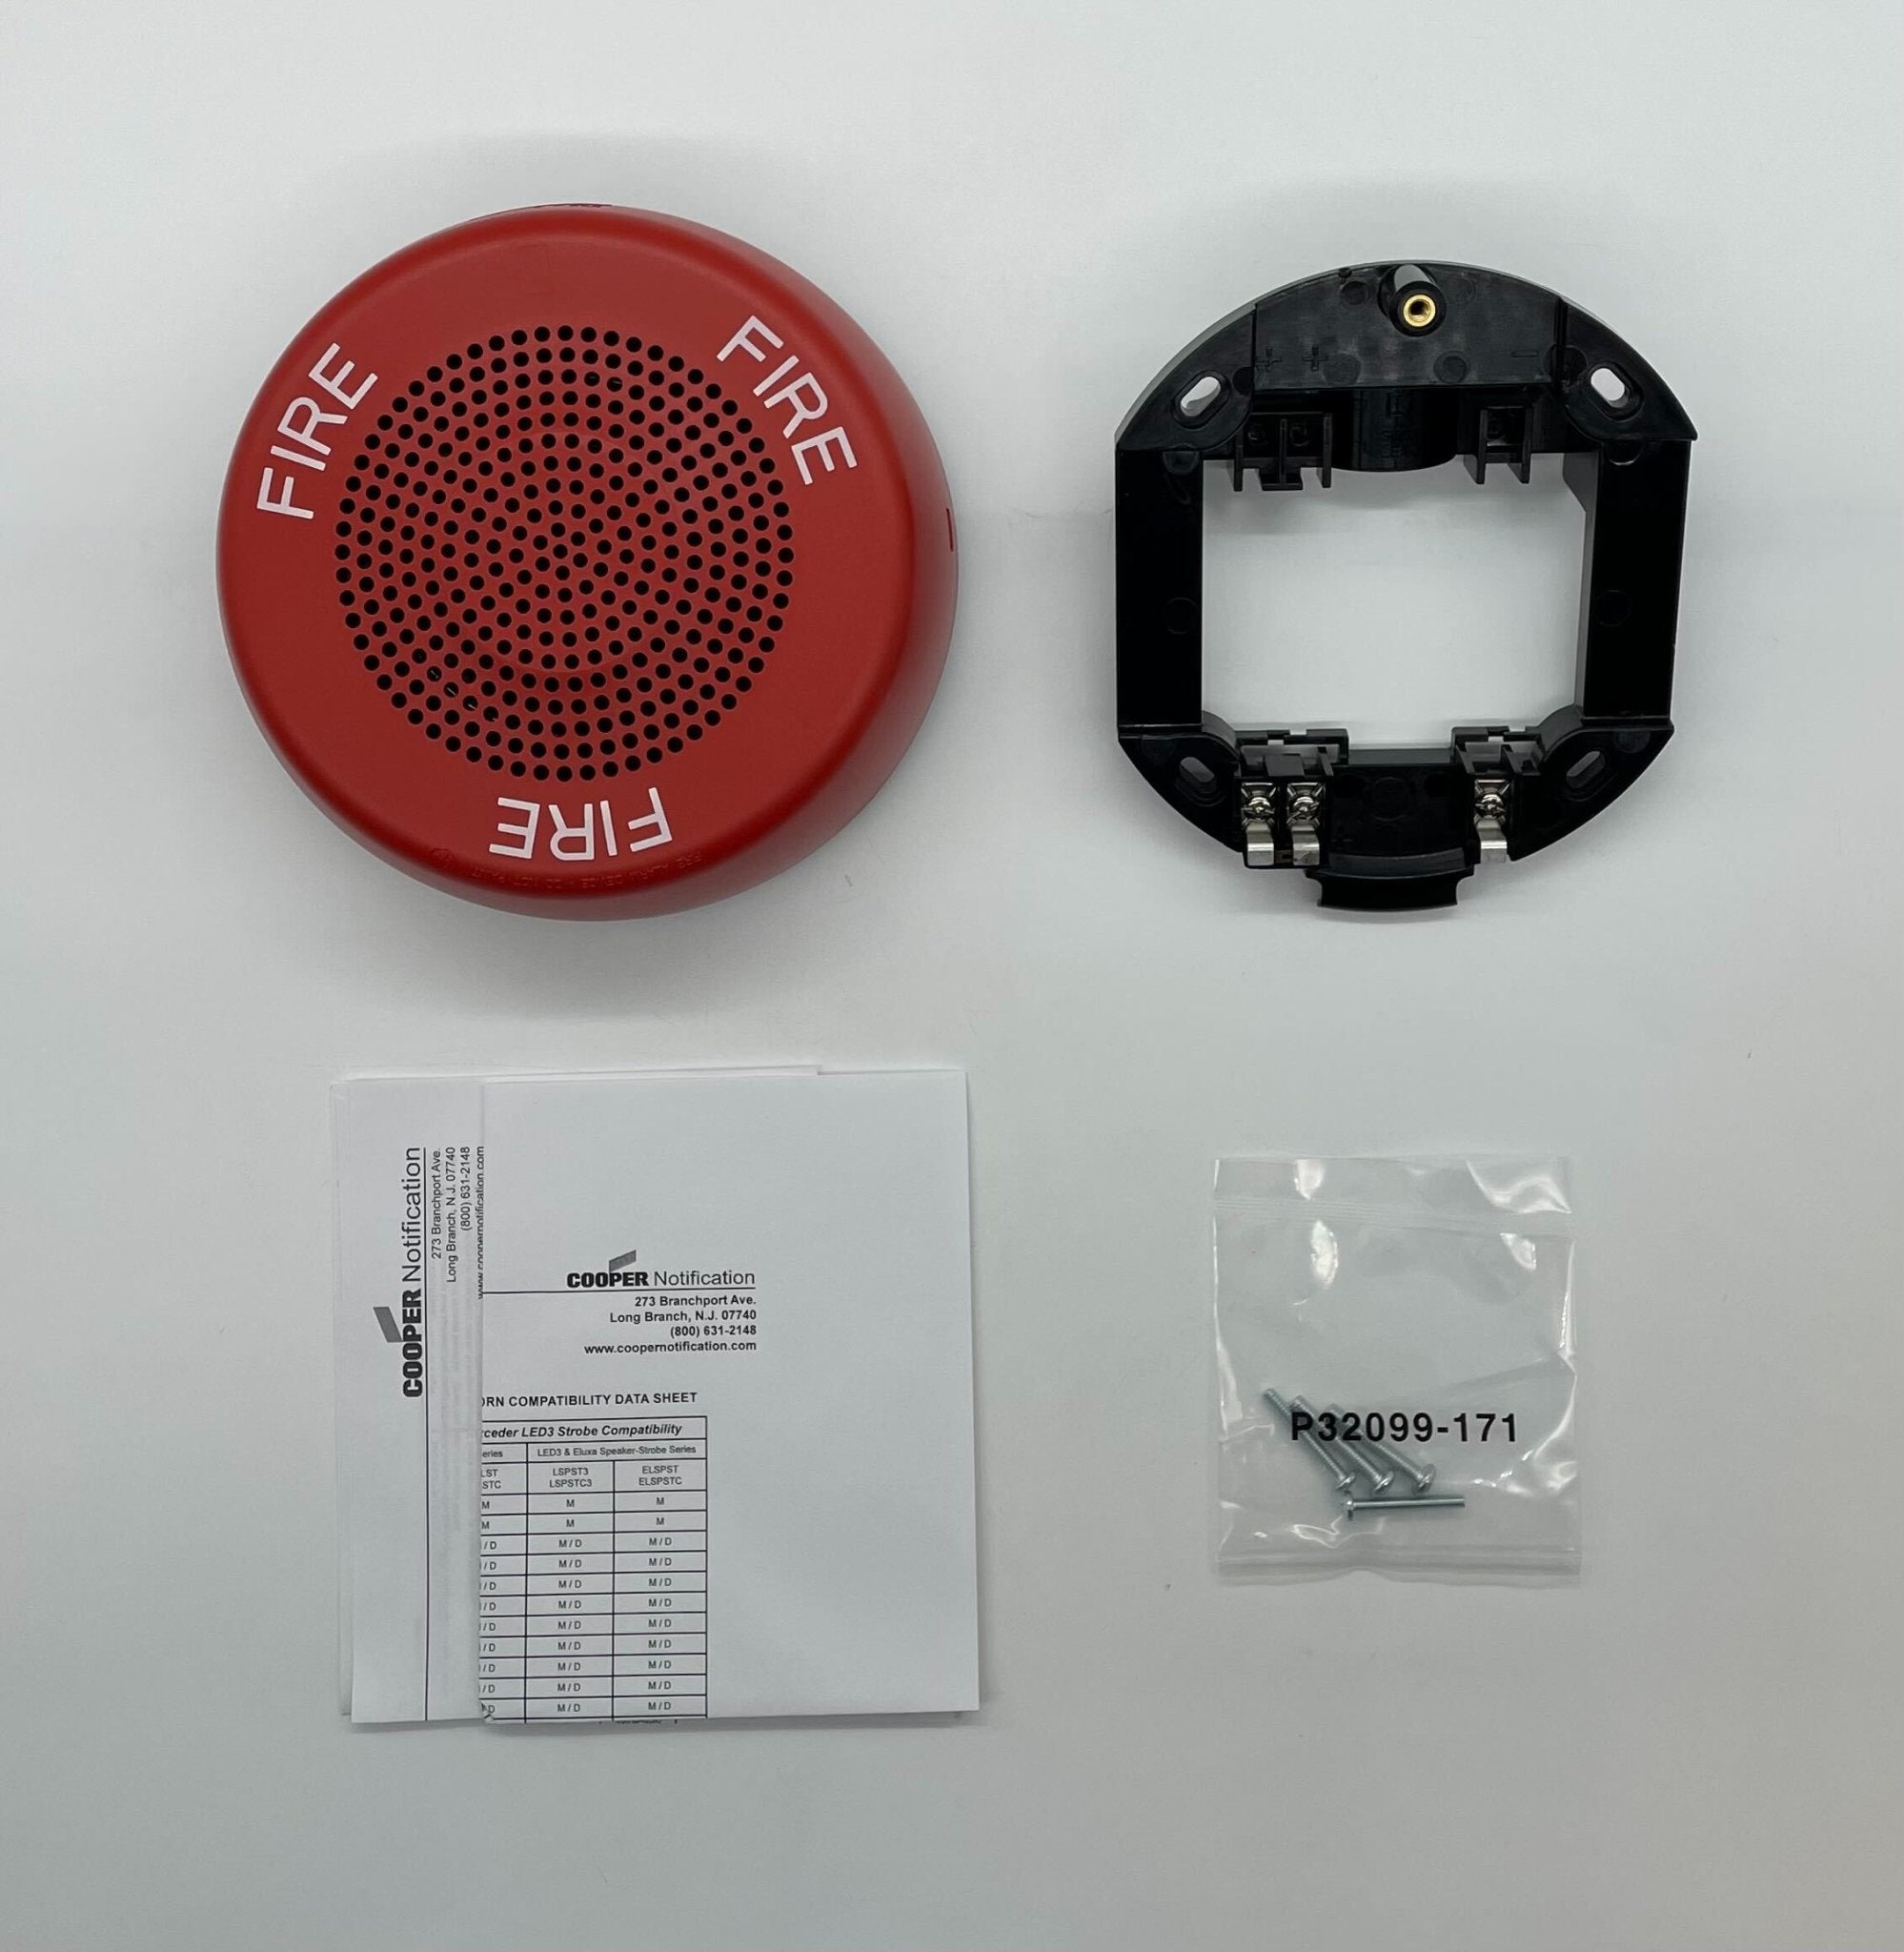 Wheelock ELFHNRC - The Fire Alarm Supplier